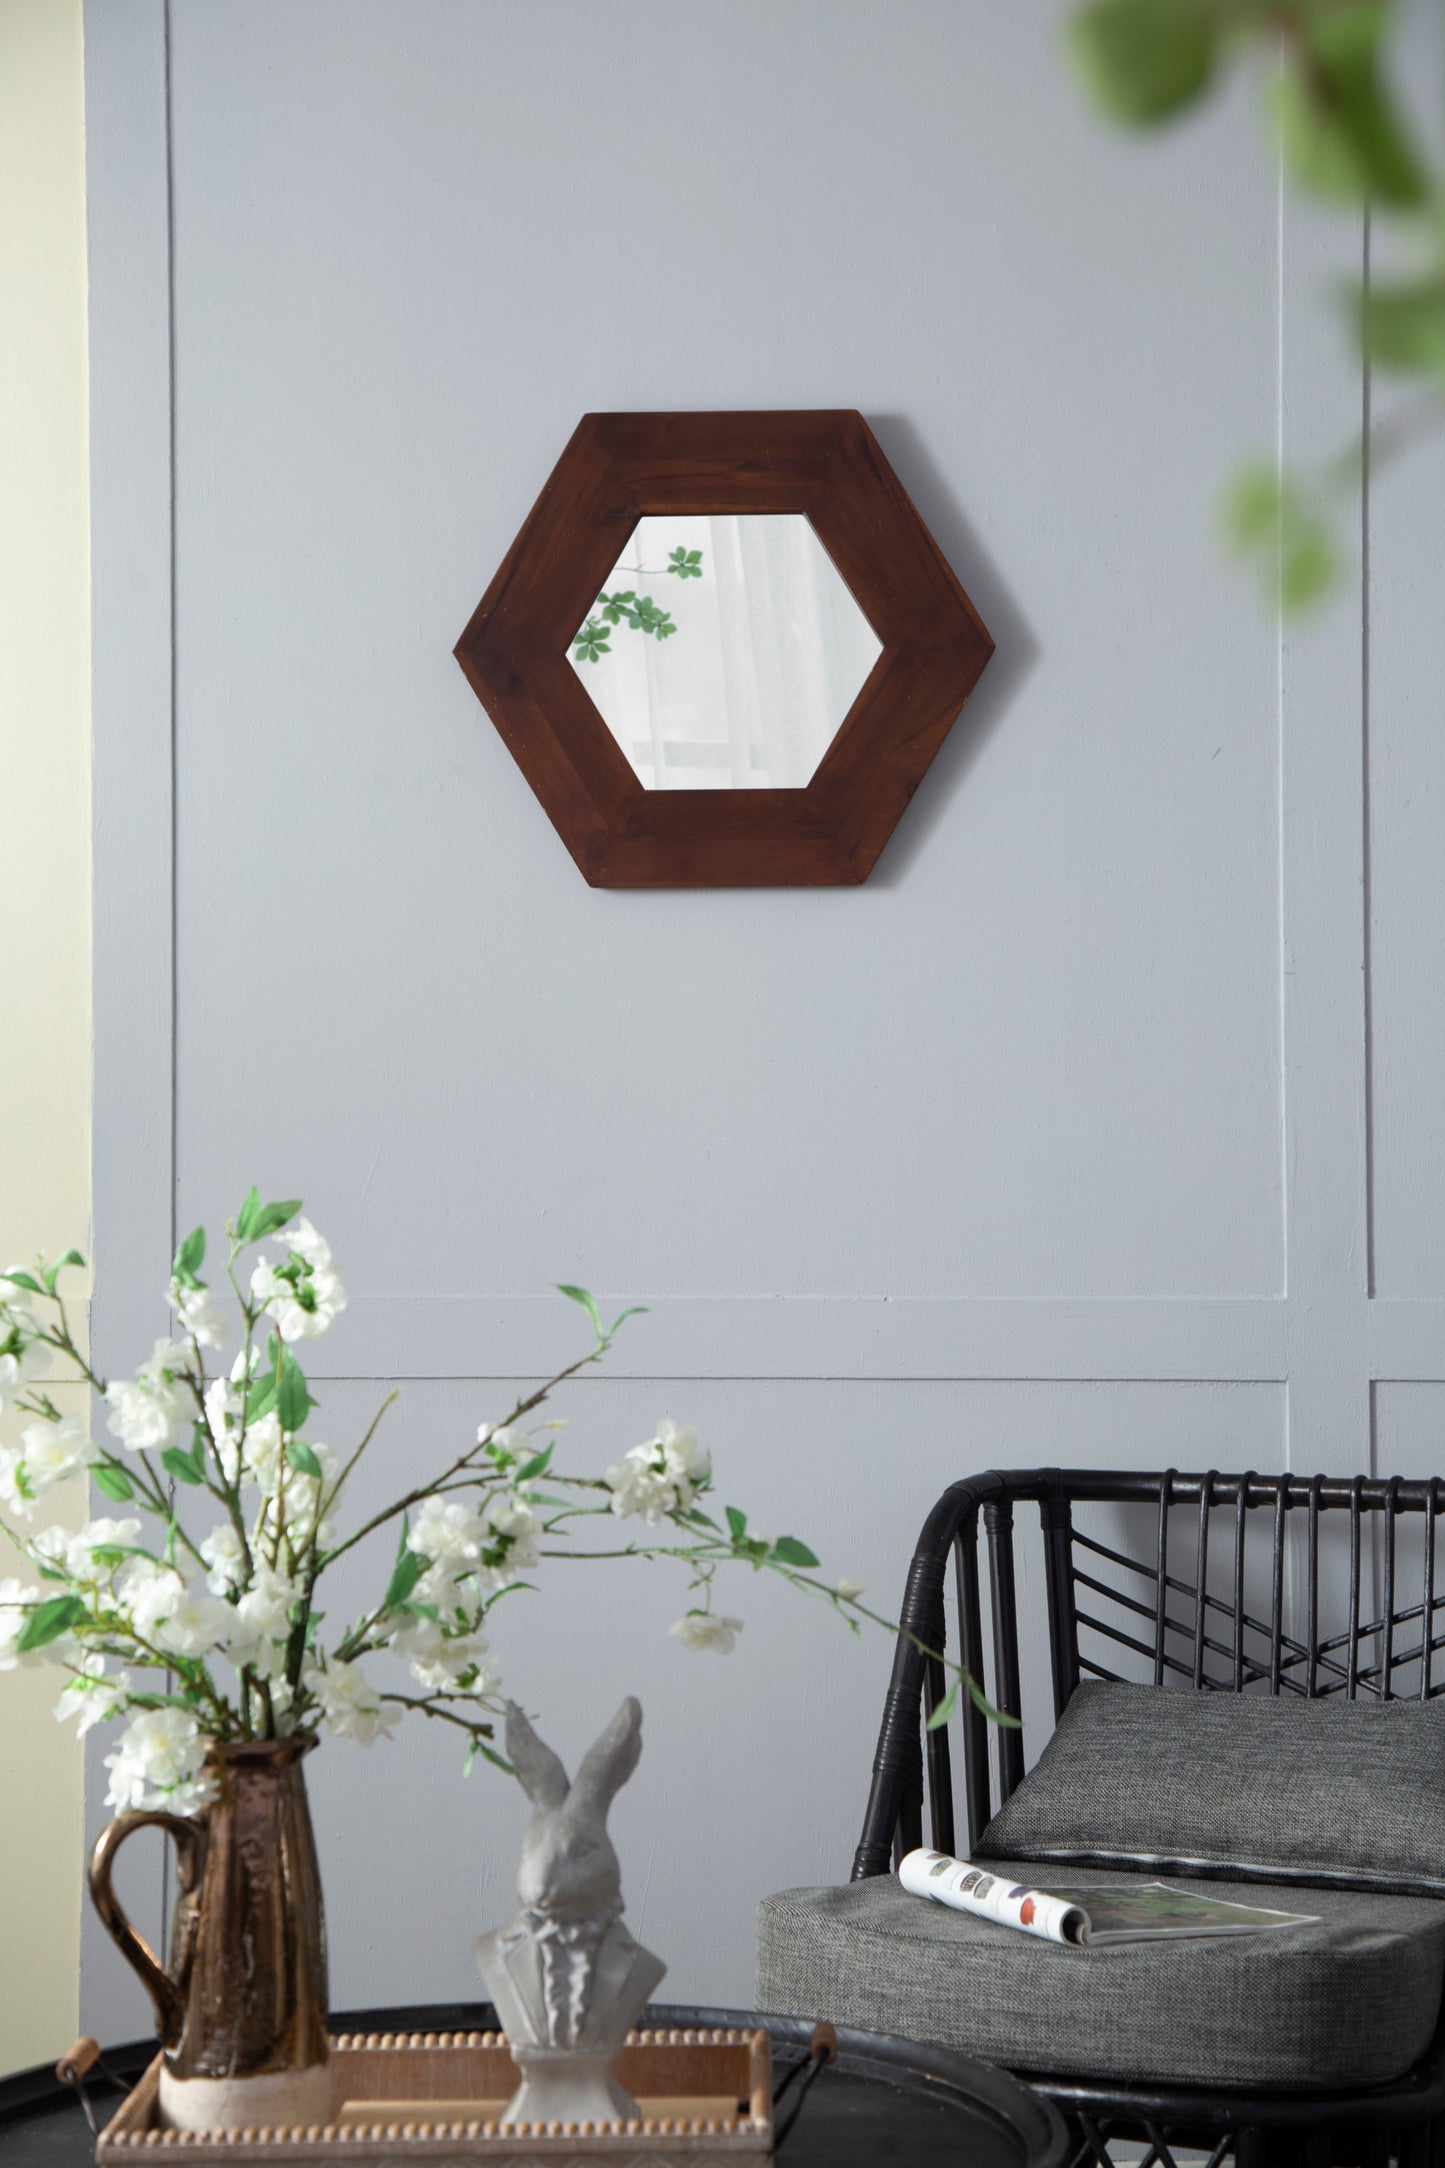 18.5" x 18.5" Hexagon Mirror with Dark Brown Wood Frame